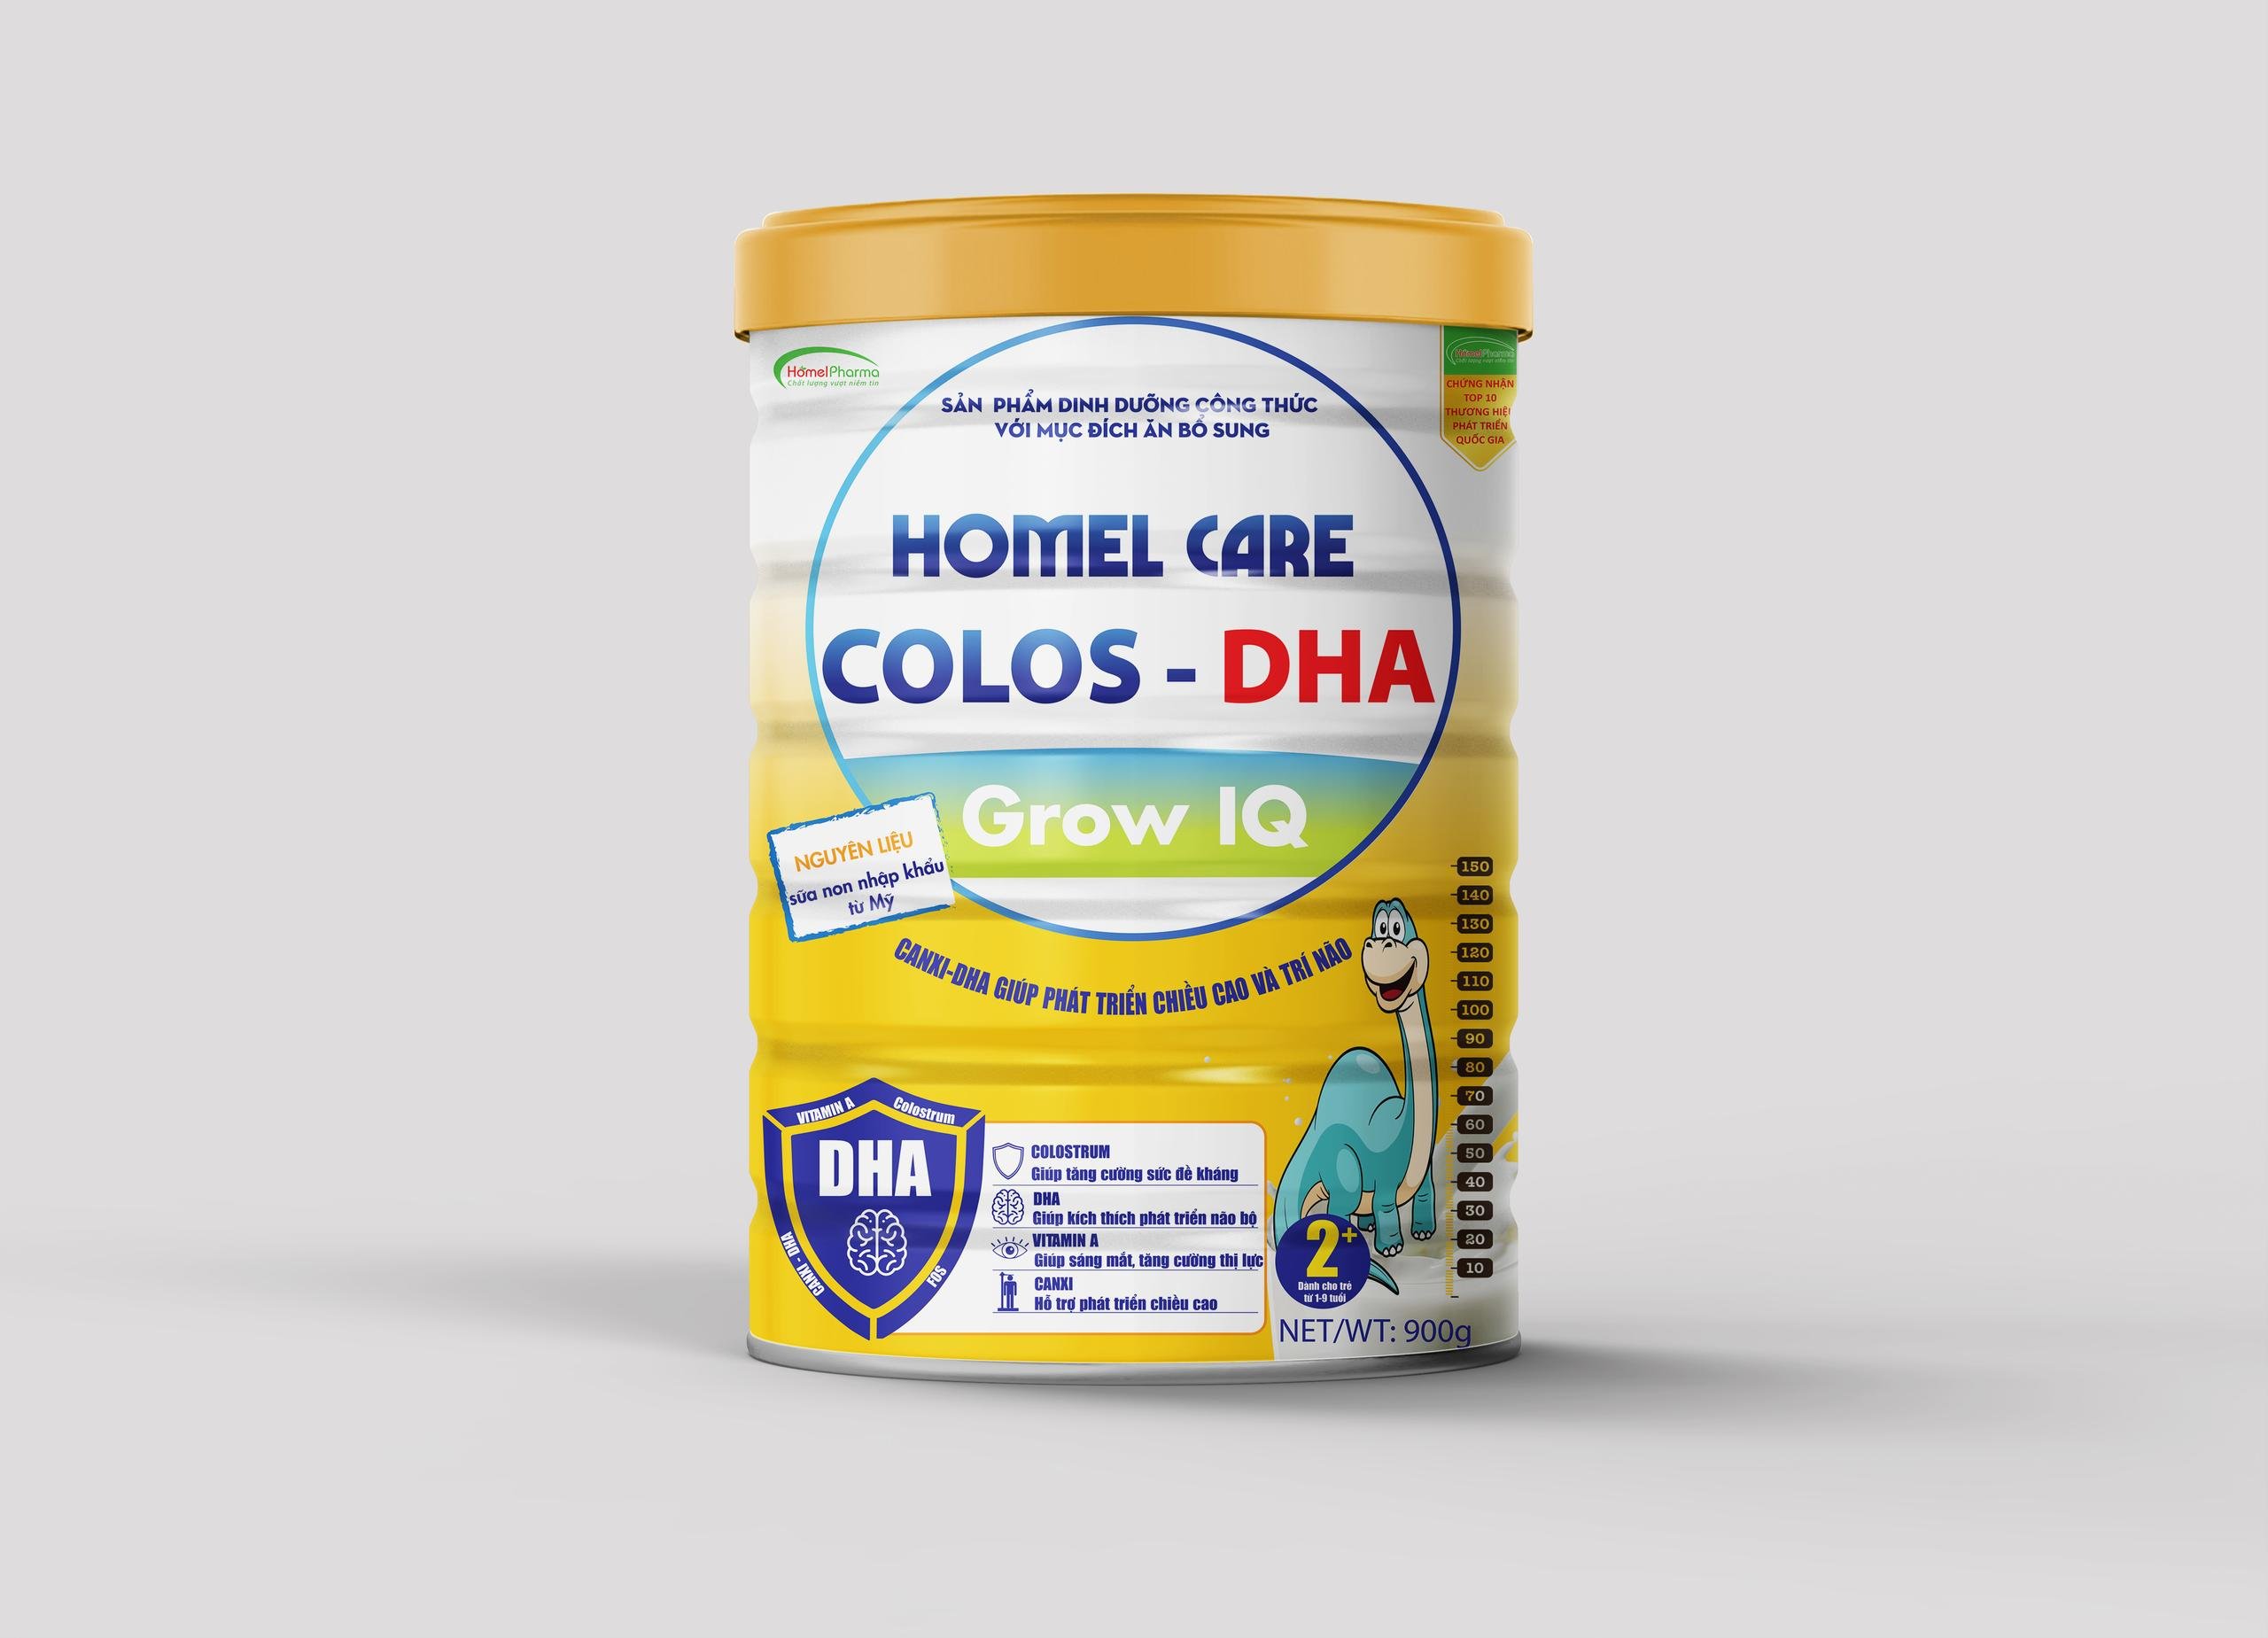 Homel Care Colos - DHA Grow IQ